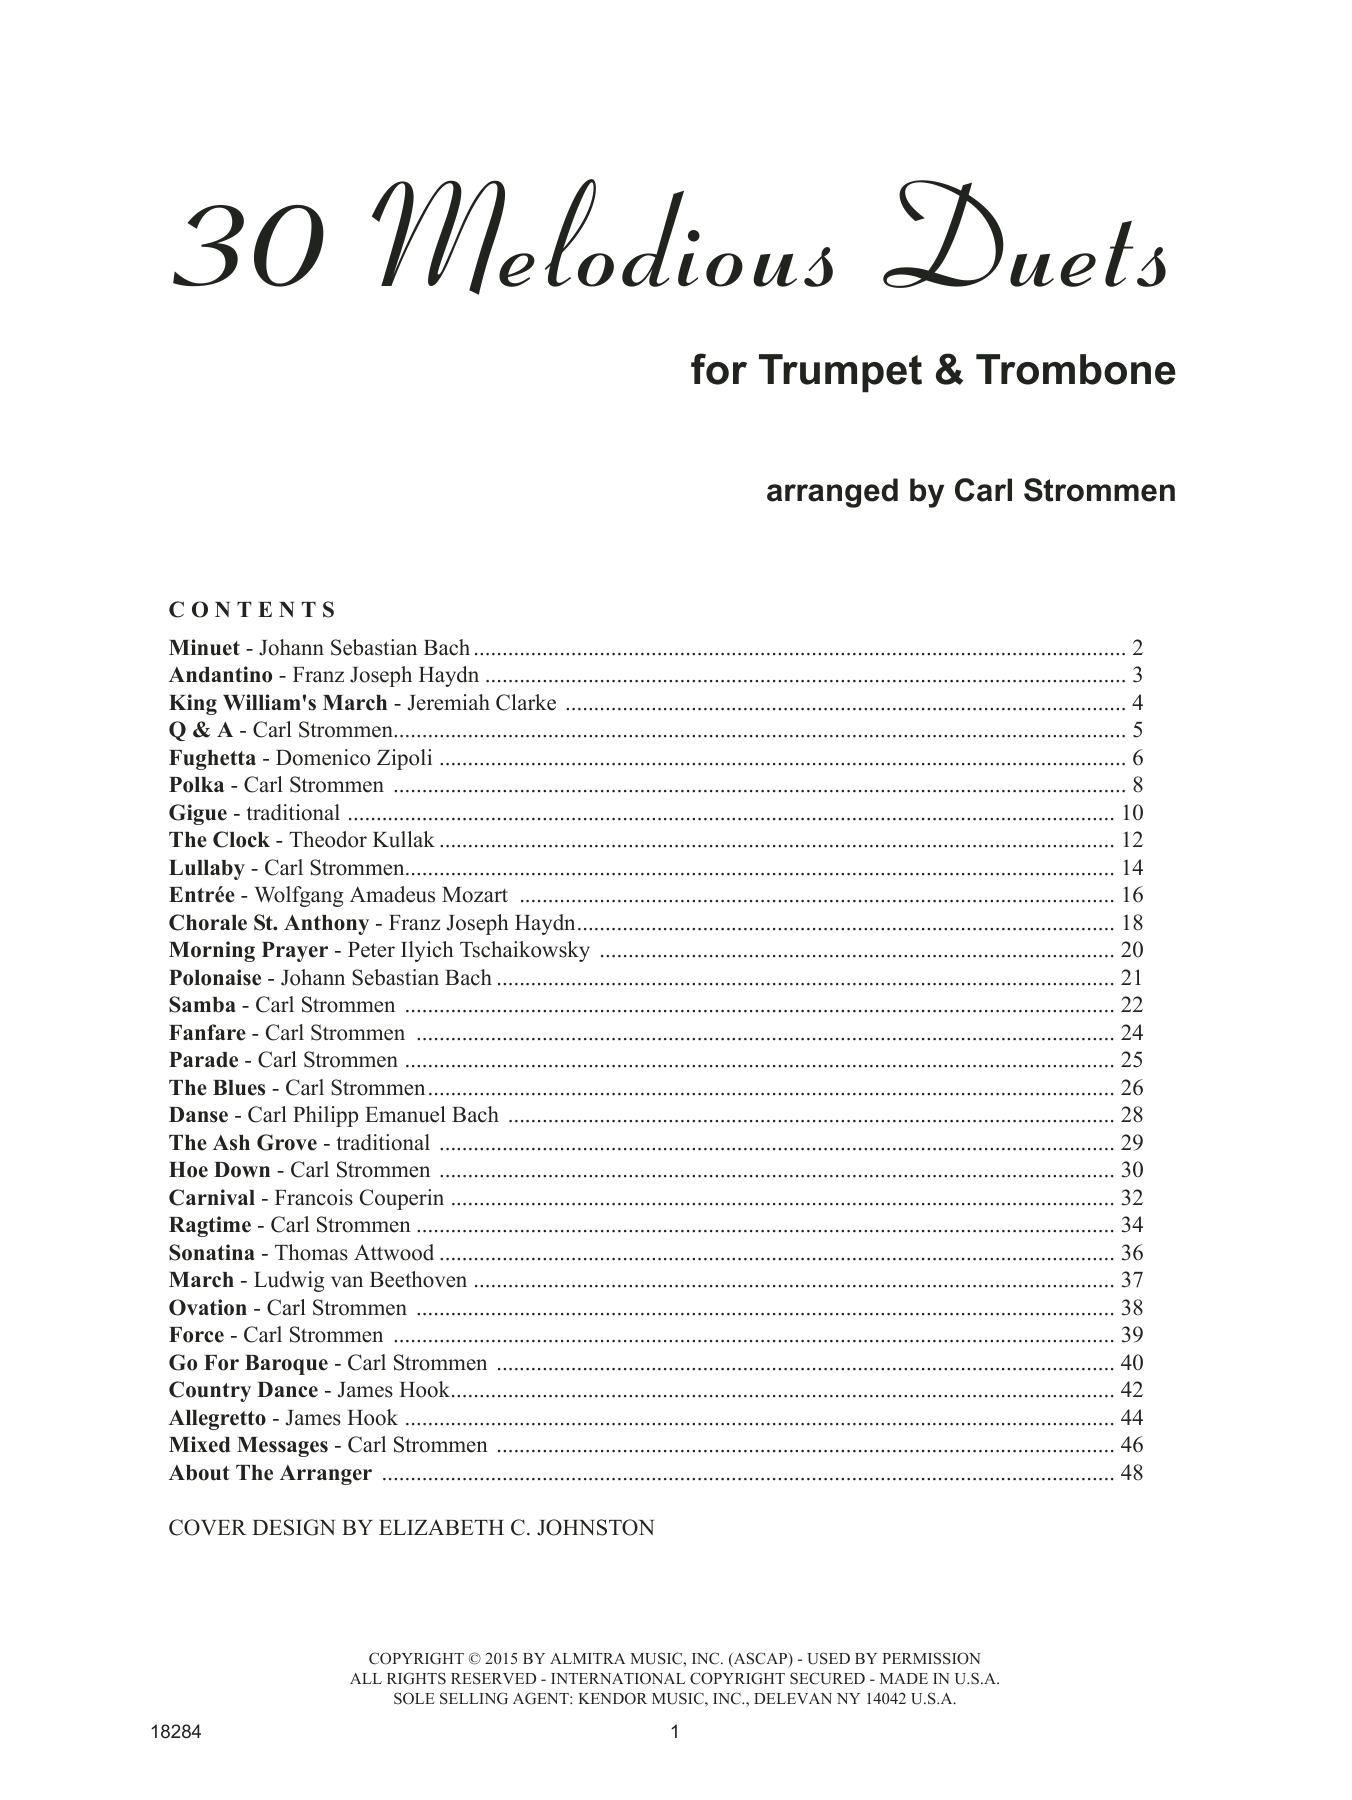 30 Melodious Duets (Trumpet & Trombone) sheet music